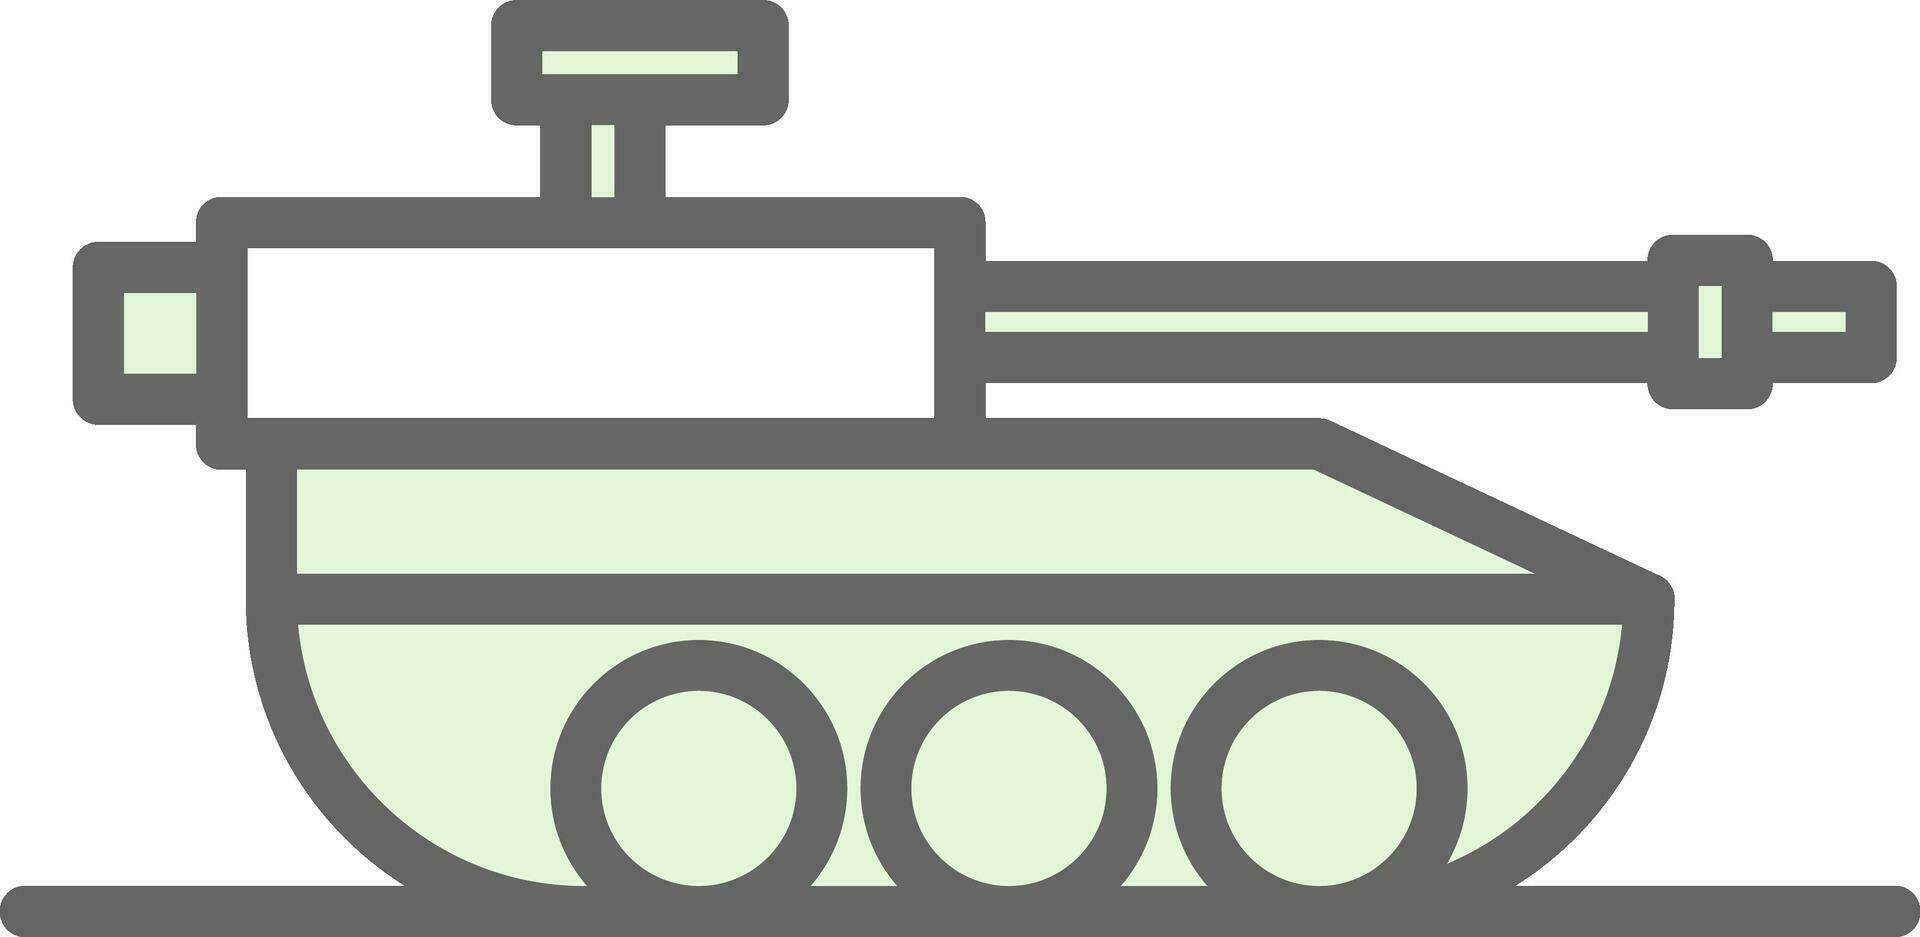 tank vector icoon ontwerp